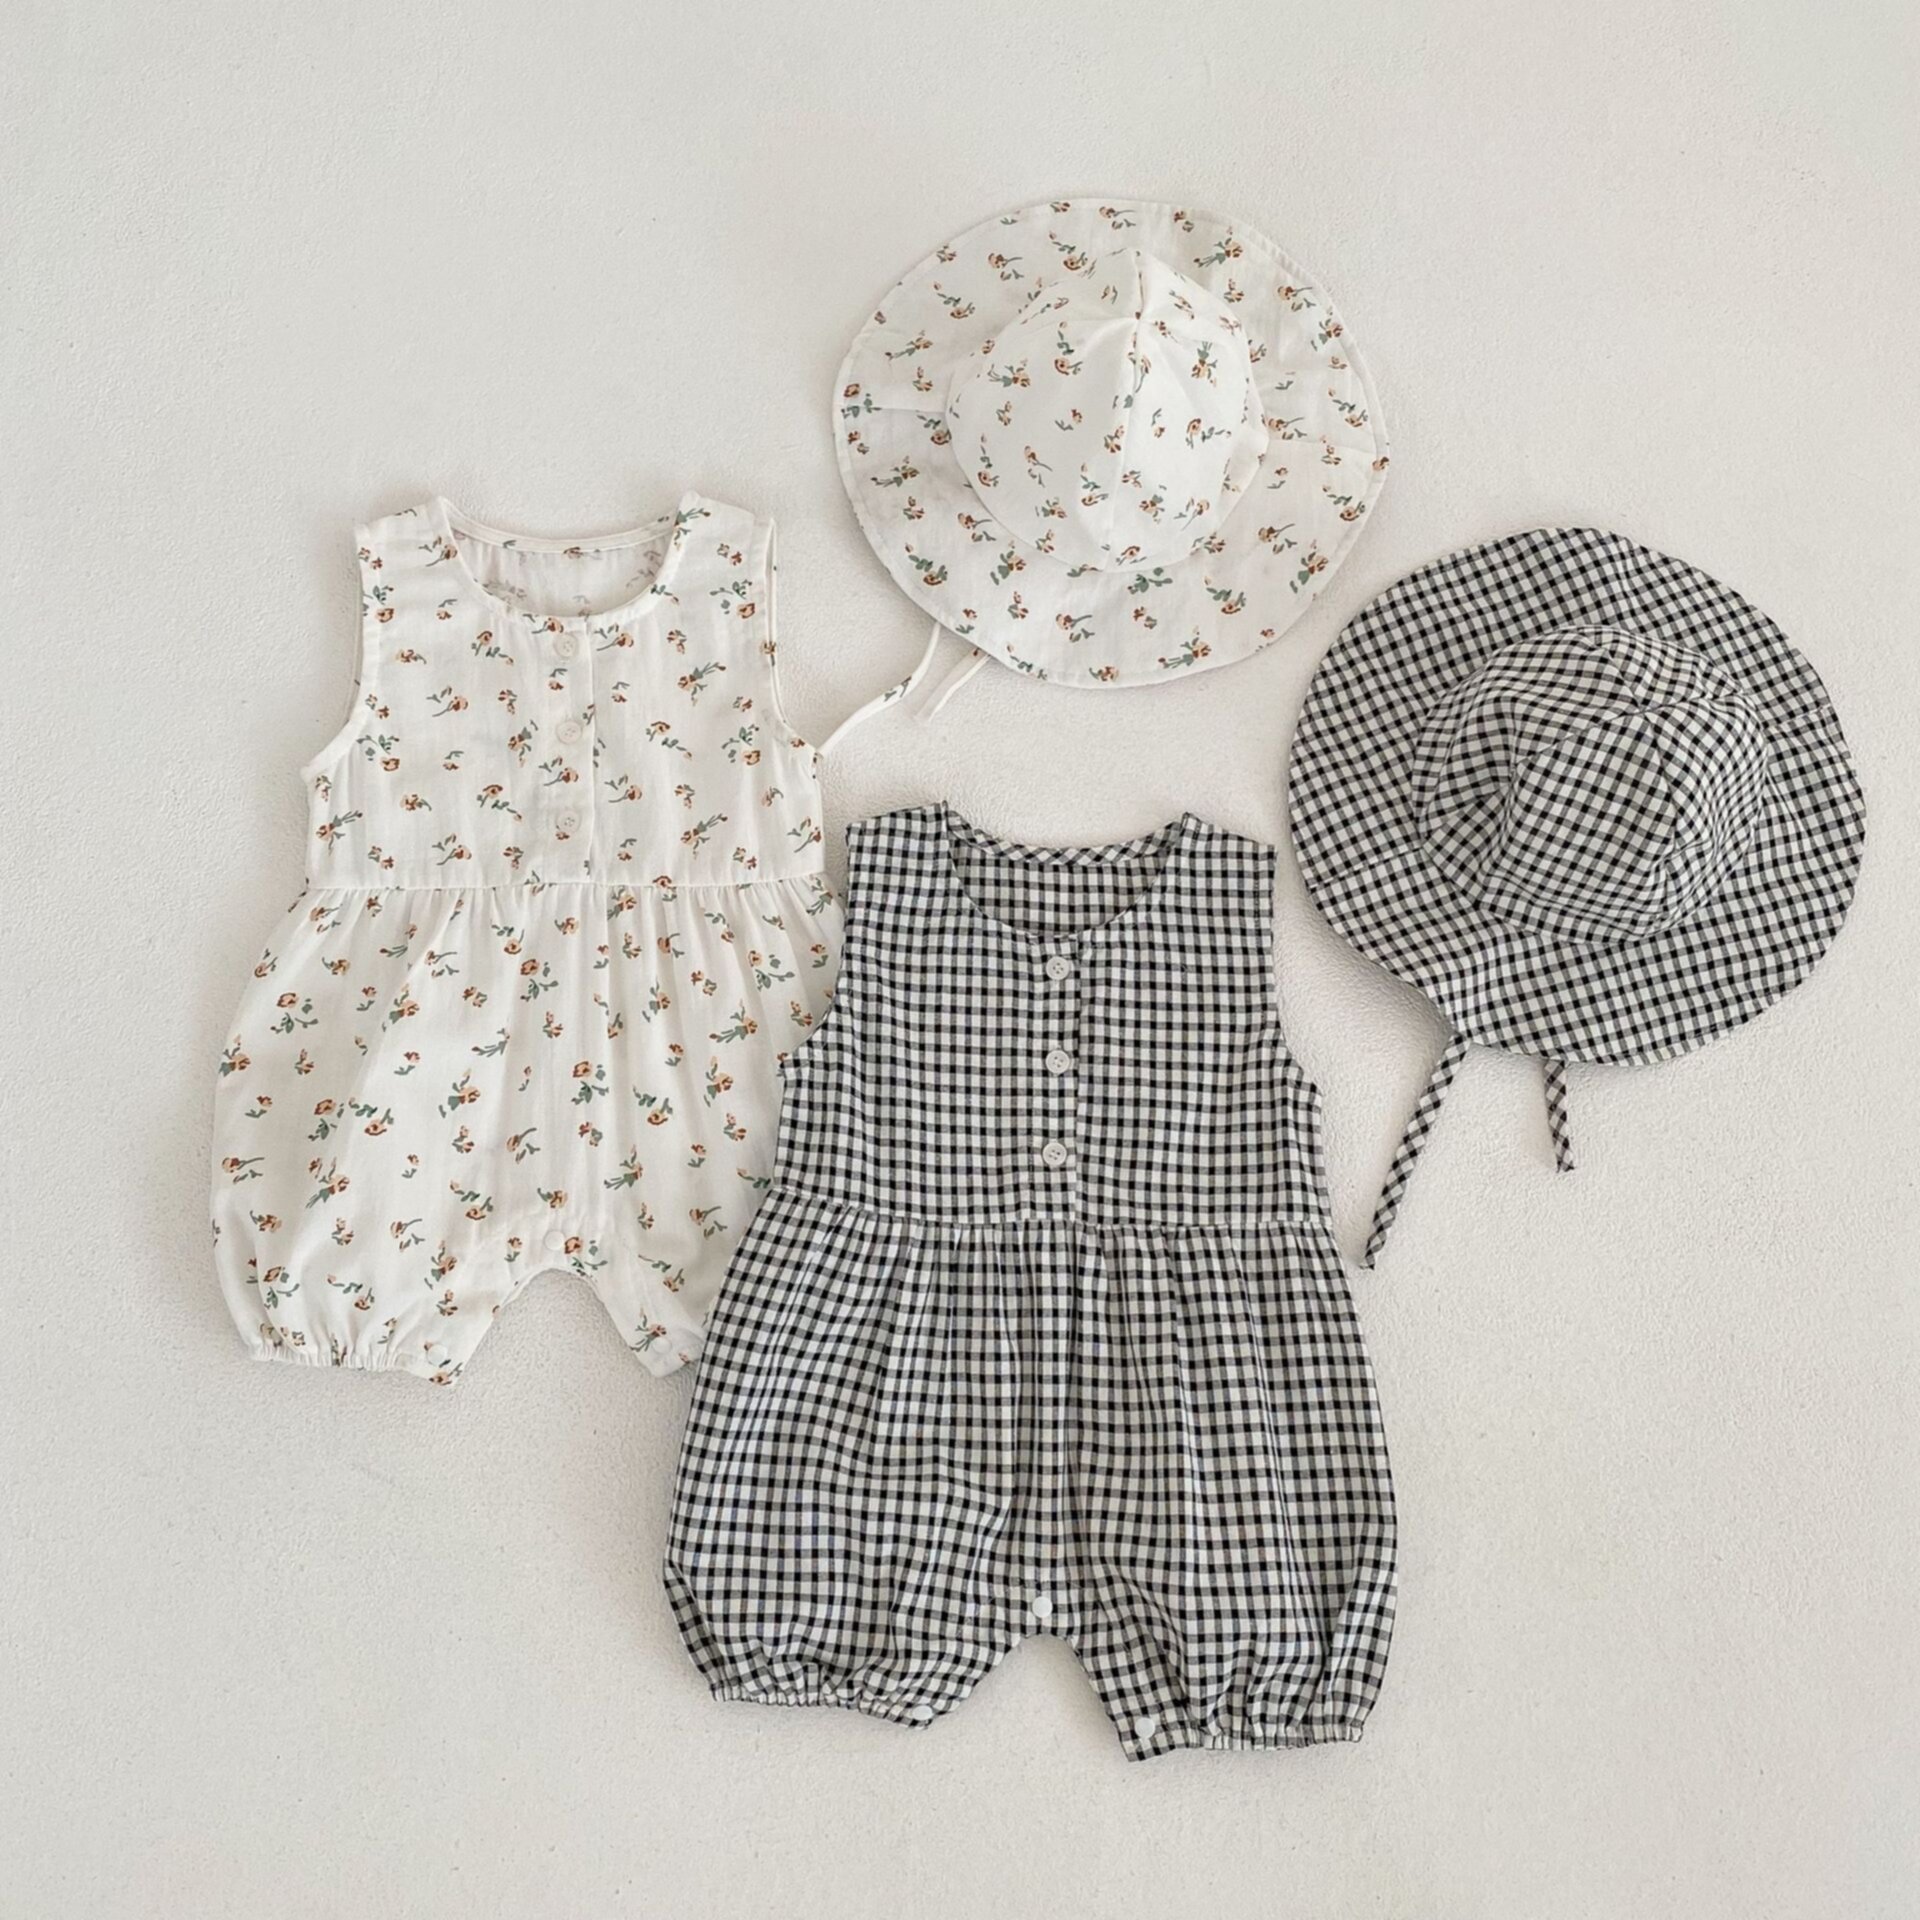 INS Summer Baby Girls' Cute Print Sleeveless Rompers